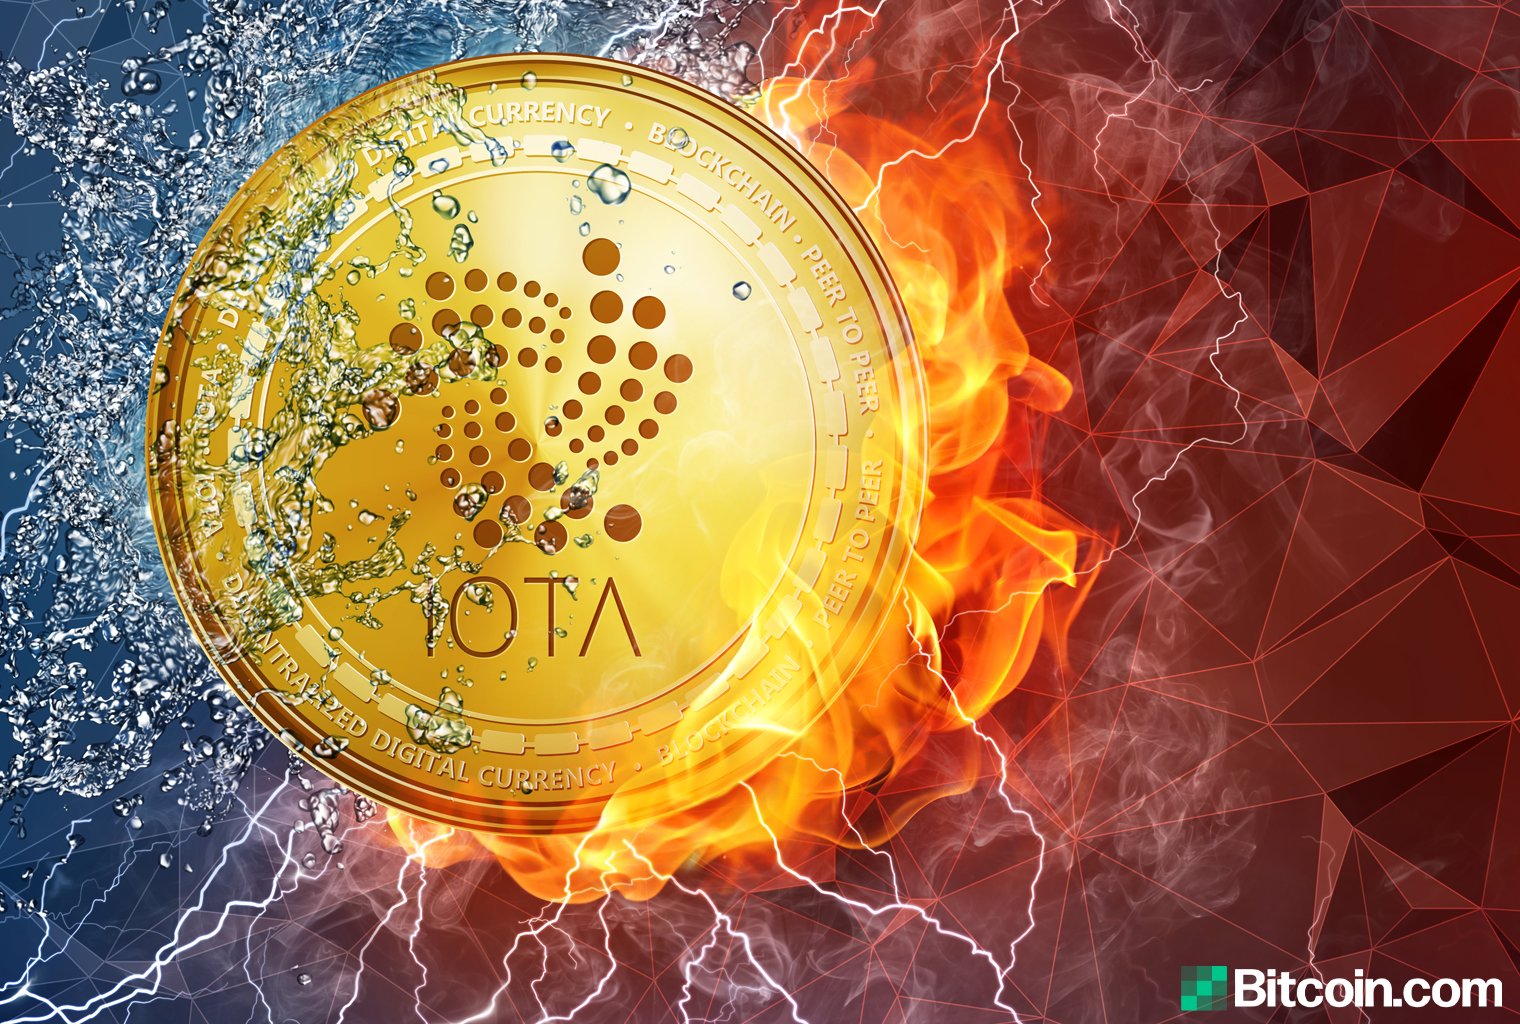 will iota replace bitcoin